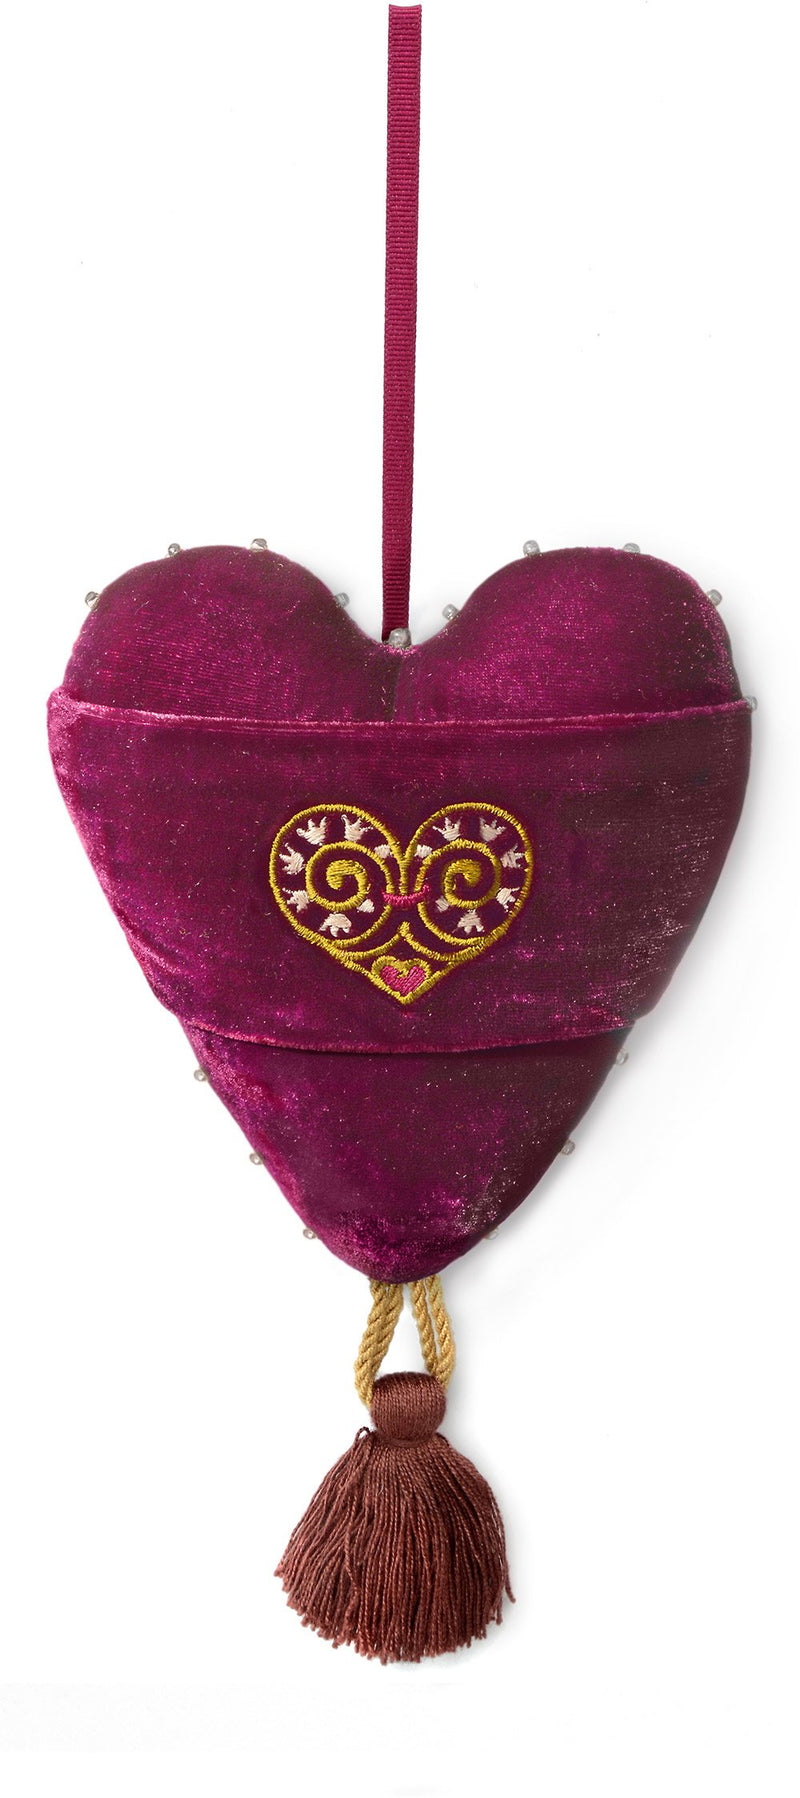 back of stuffed heart, victorian striped fabric, love is enough, heart charm, romantic heart, handmade heart, stuffed heart, valentine heart, hand sewn, silk velvet